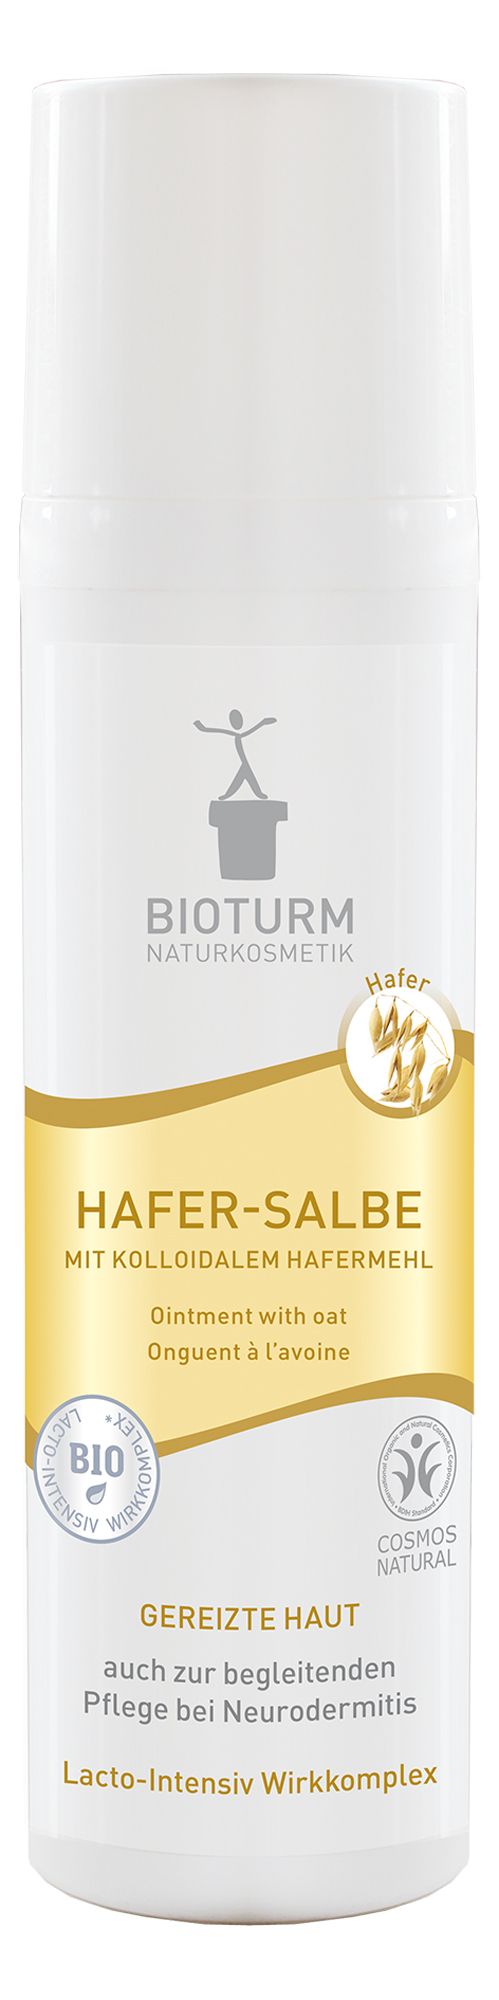 BIOTURM Hafer-Salbe